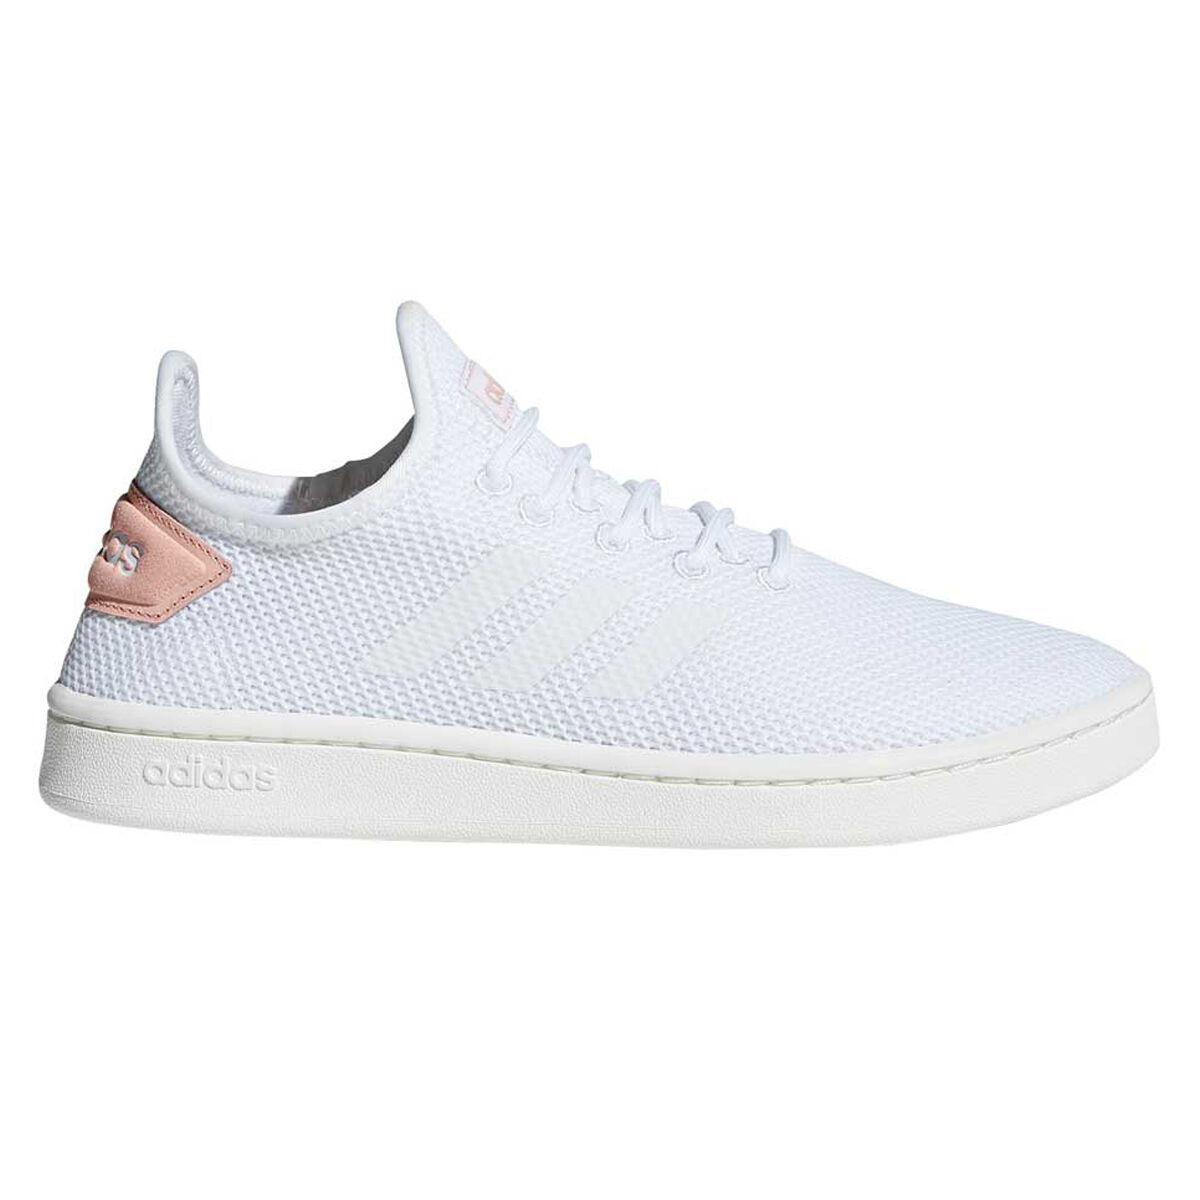 white tennis shoes womens adidas